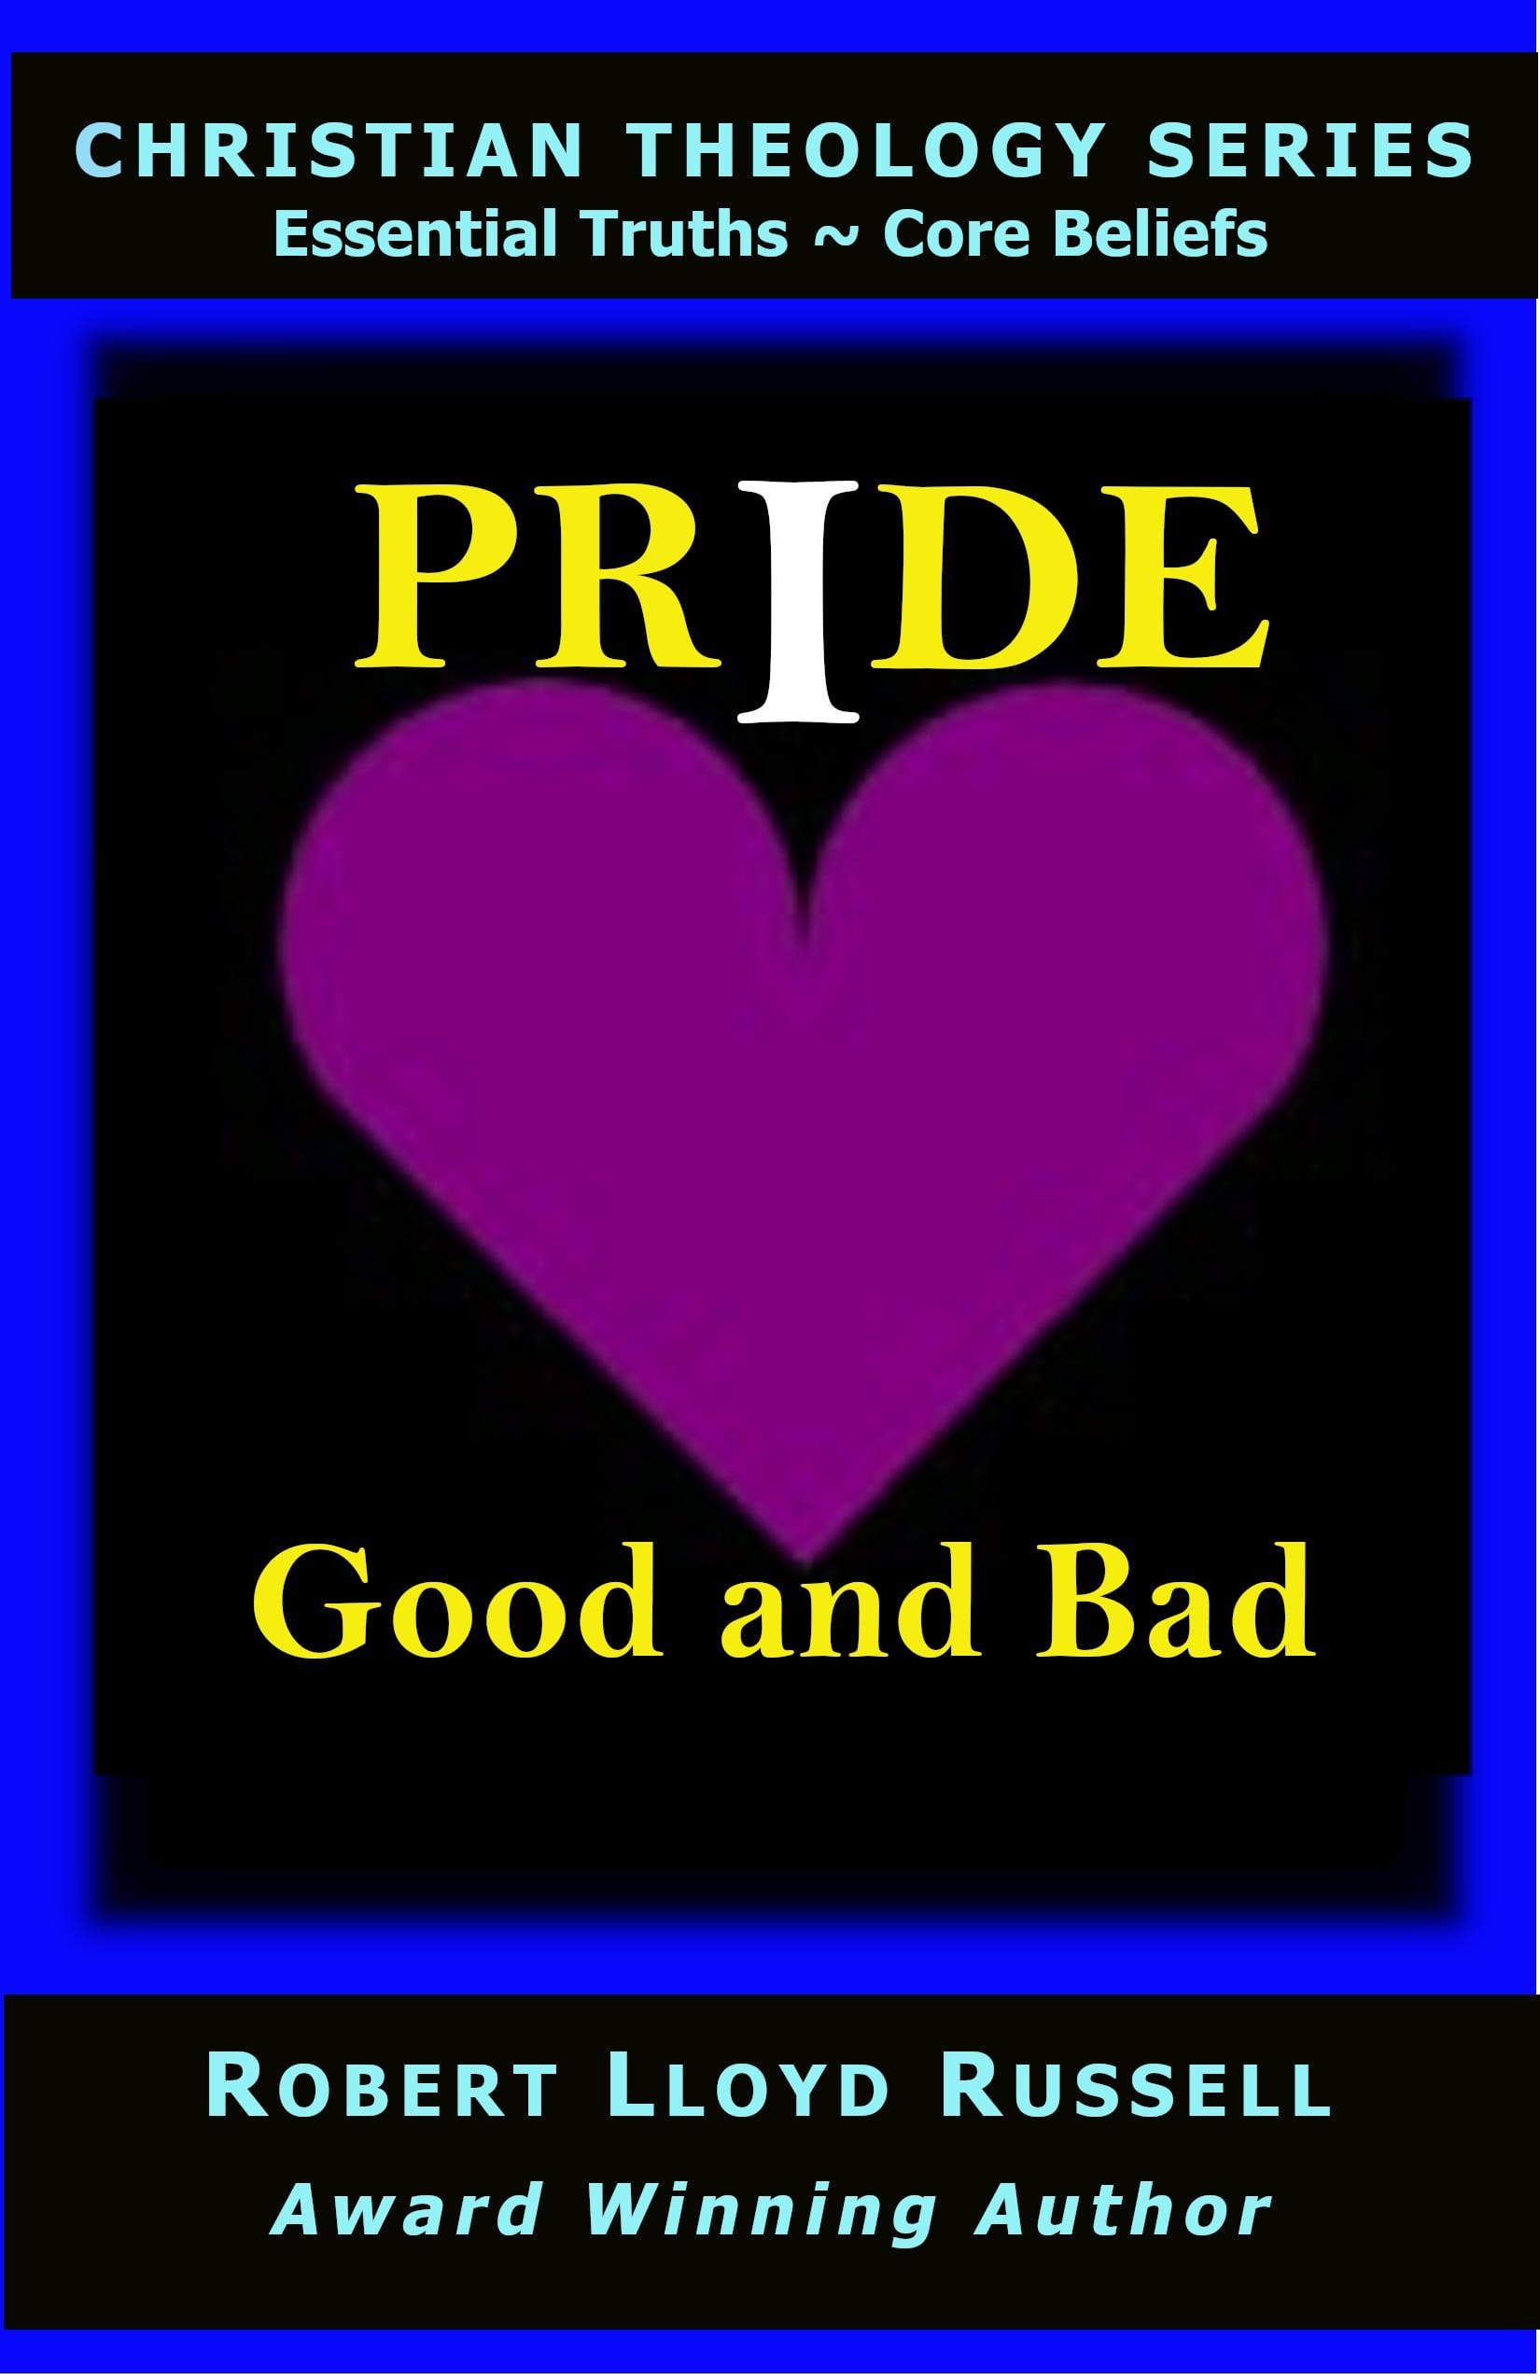 Book: Pride, Good and Bad